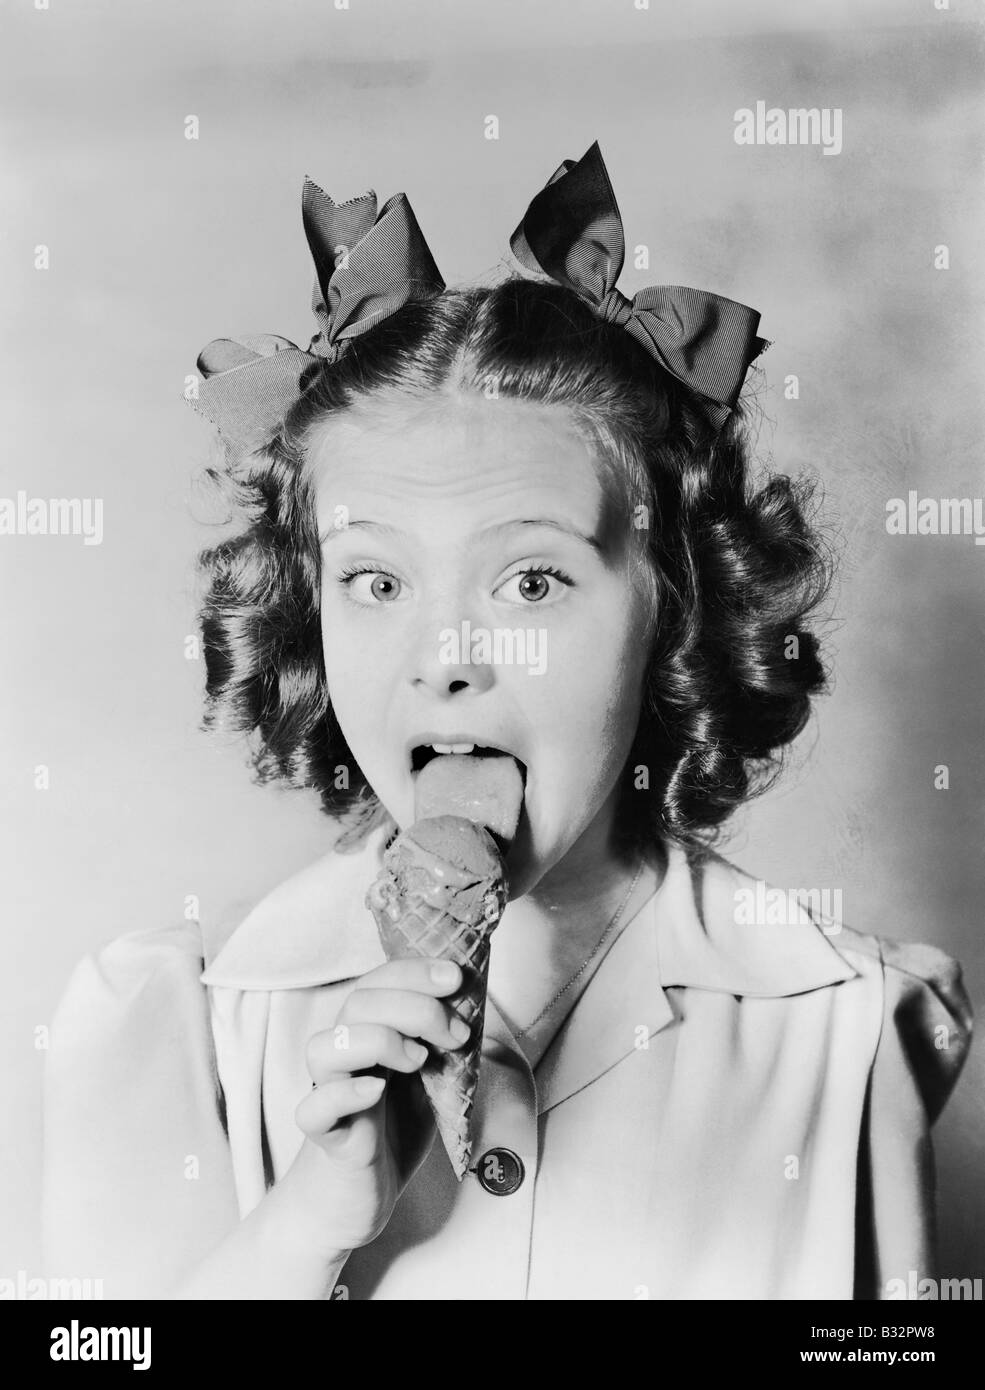 Girl licking ice cream cone Stock Photo